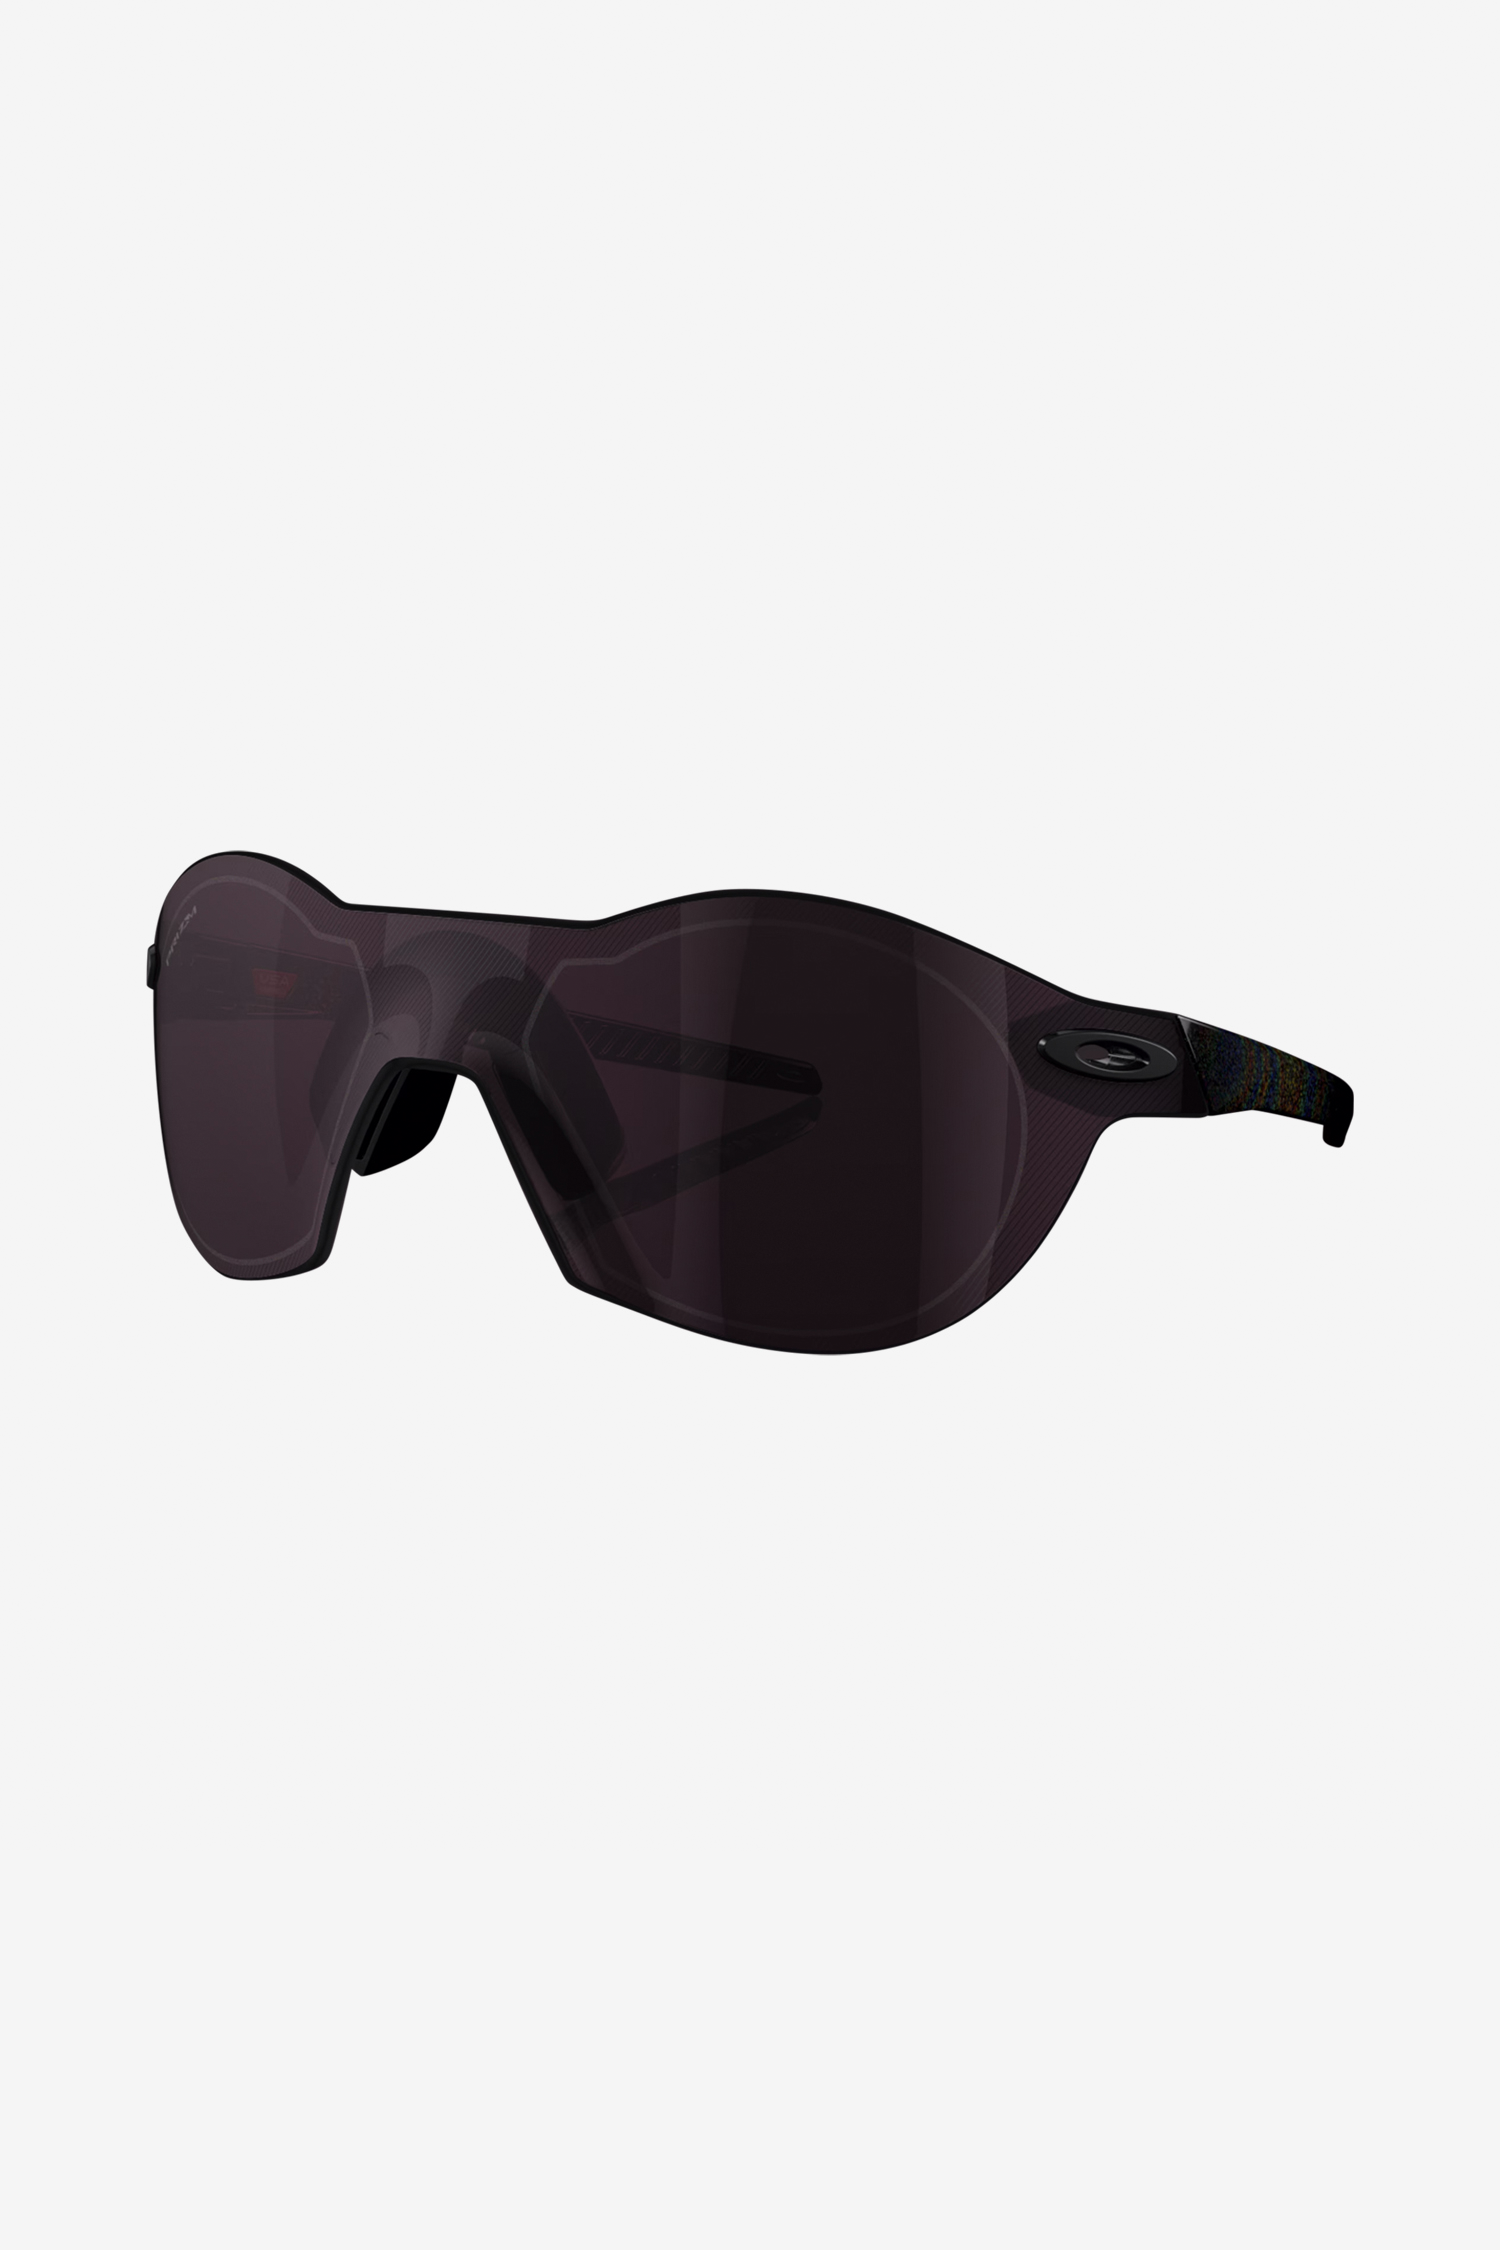 Re:Subzero Solstice Collection Sunglasses- Selectshop FRAME